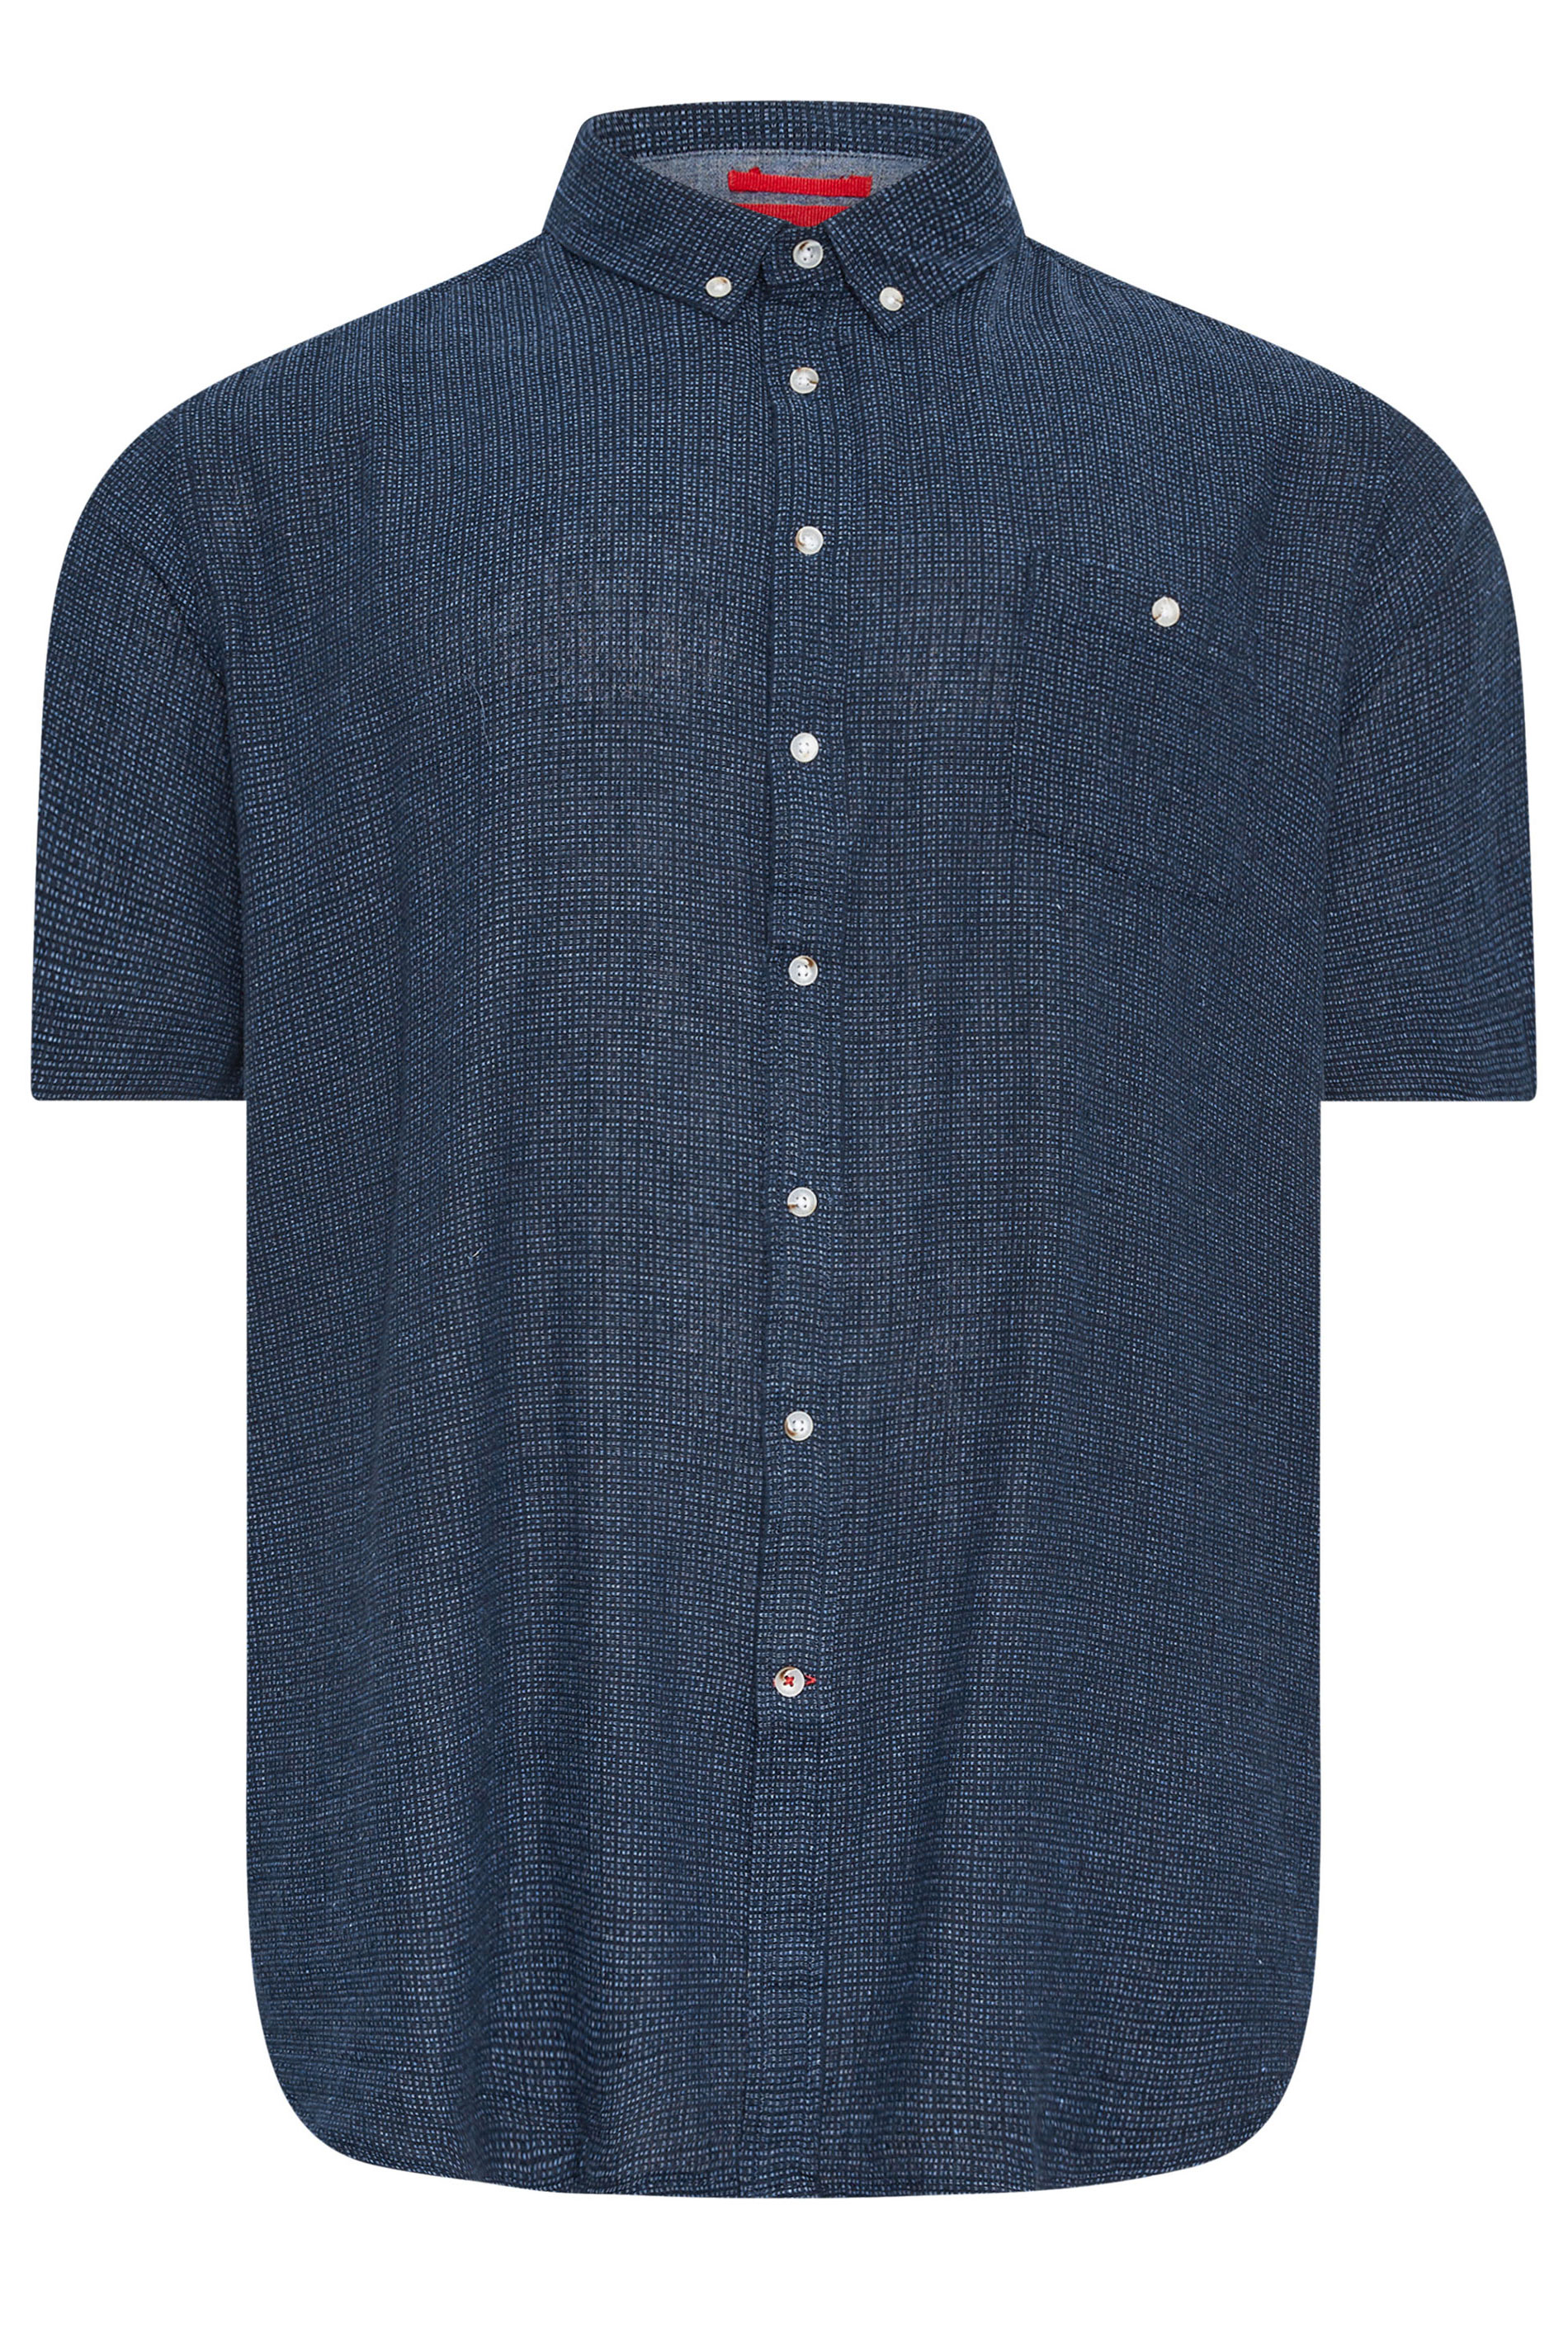 D555 Big & Tall Navy Blue Woven Square Print Linen Mix Short Sleeve Shirt | BadRhino 3